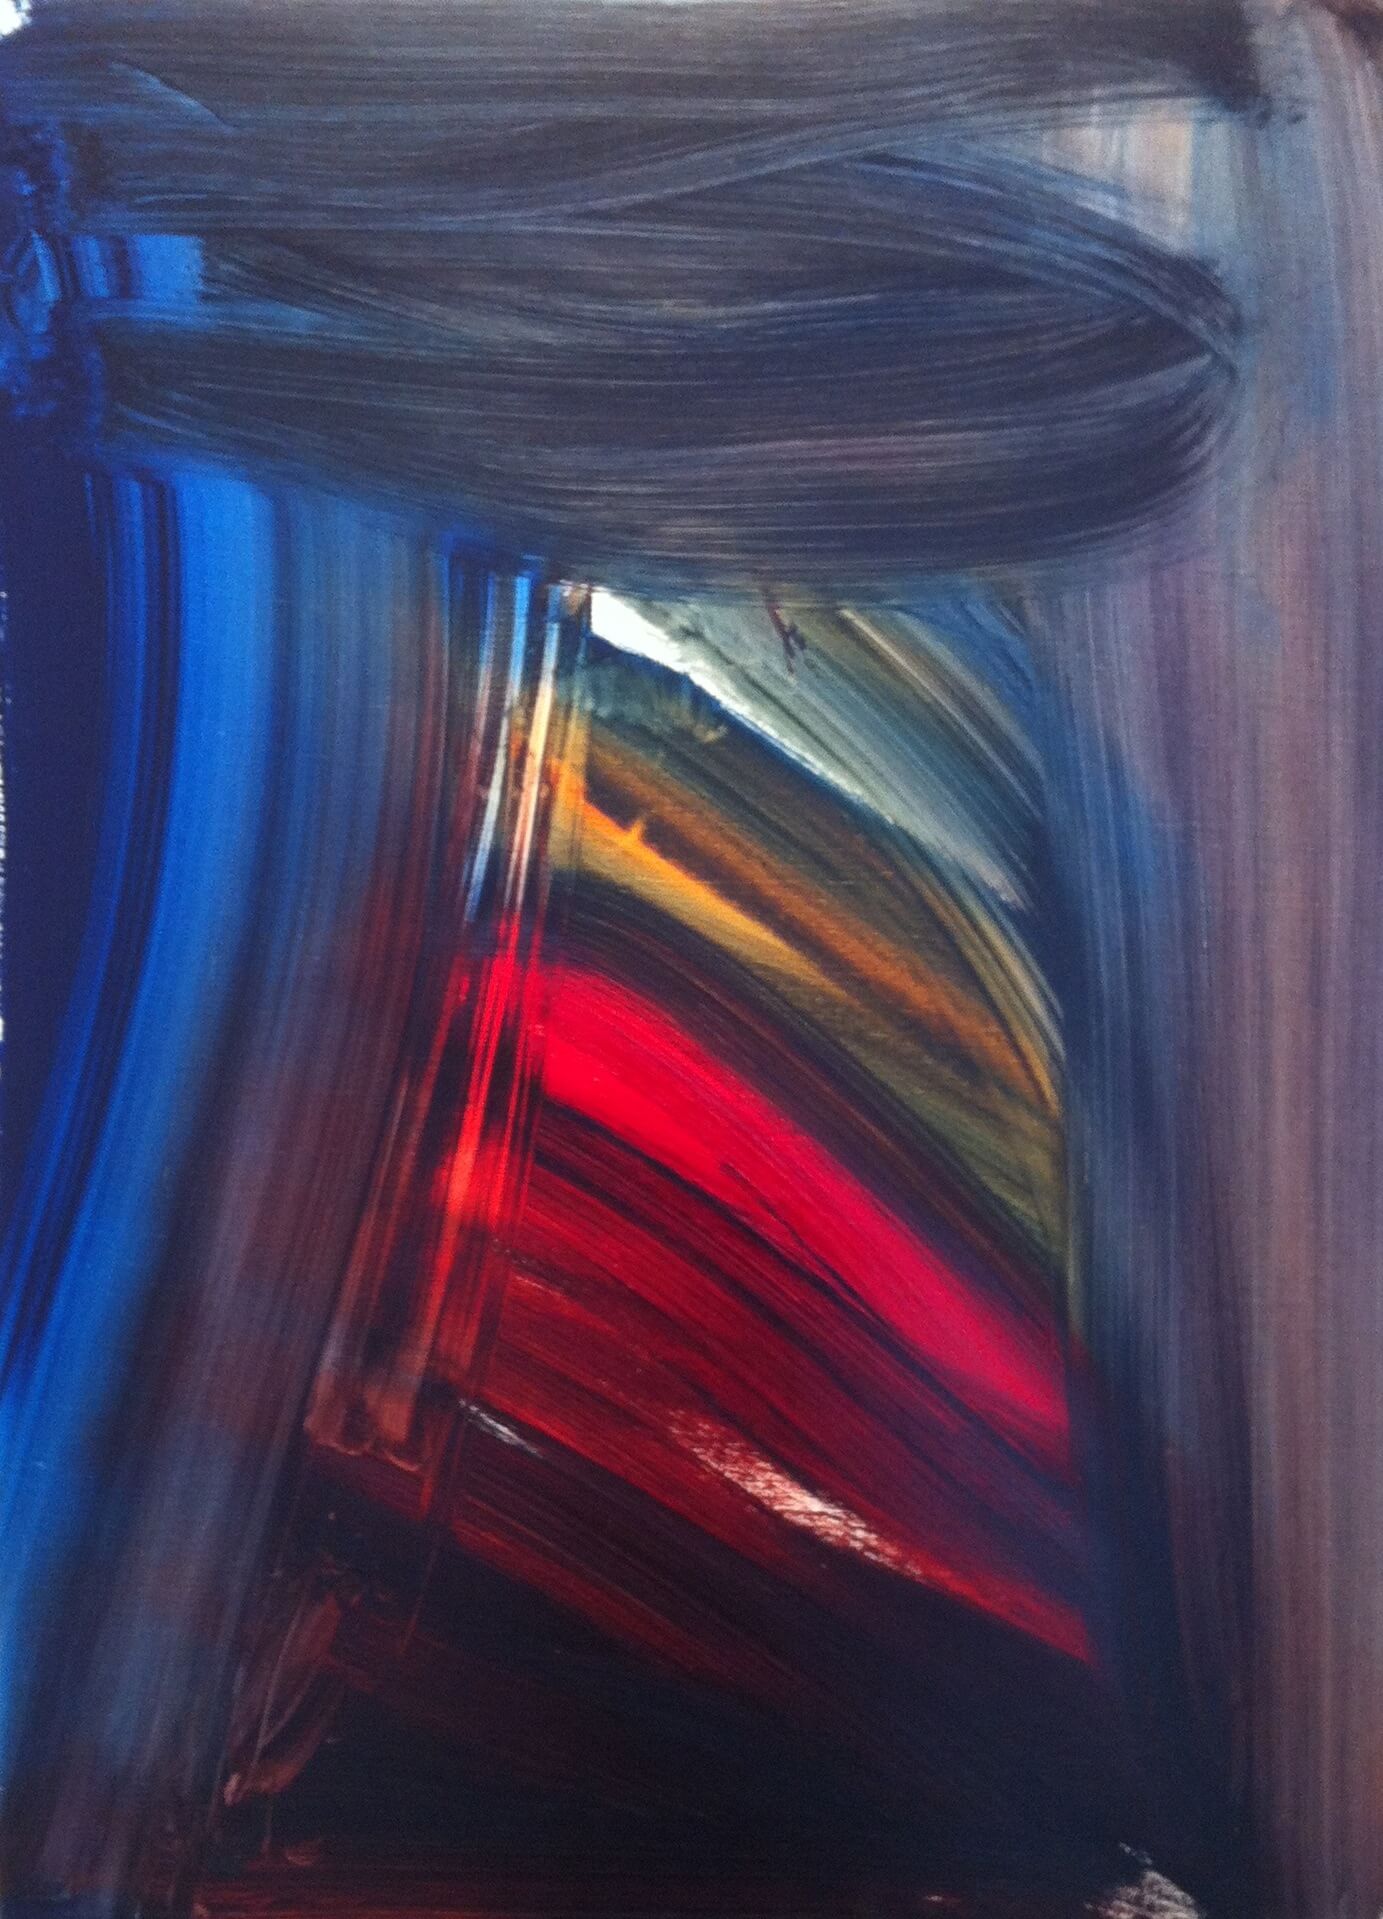 Andrea Belag, Red Lantern, 2012 oil on linen, 30 x 22 inches (courtesy Steven Harvey Fine Art Projects)